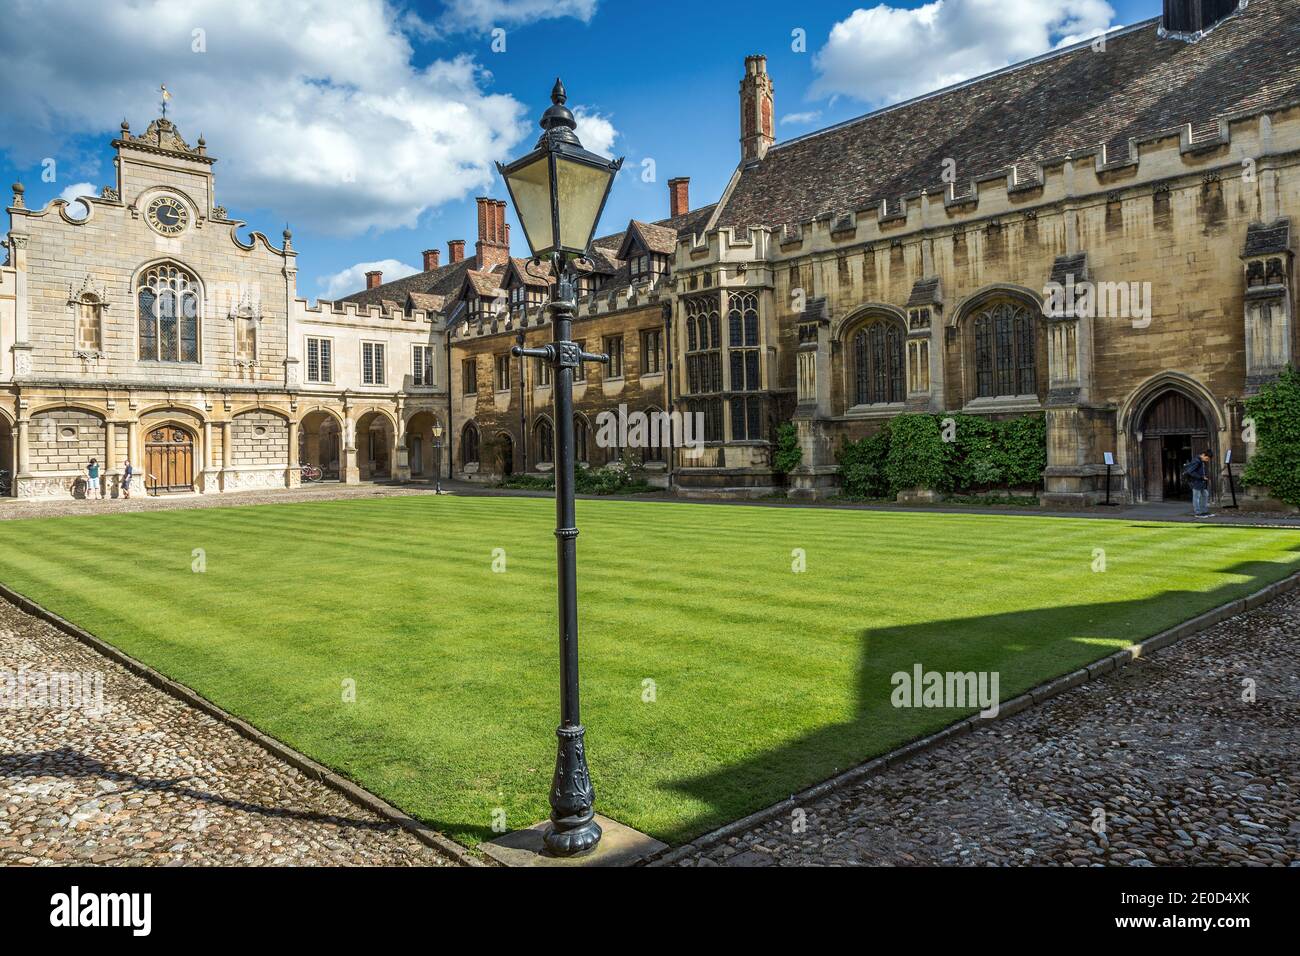 The Old Court in Peterhouse College, Teil der University of Cambridge, England, Großbritannien Stockfoto